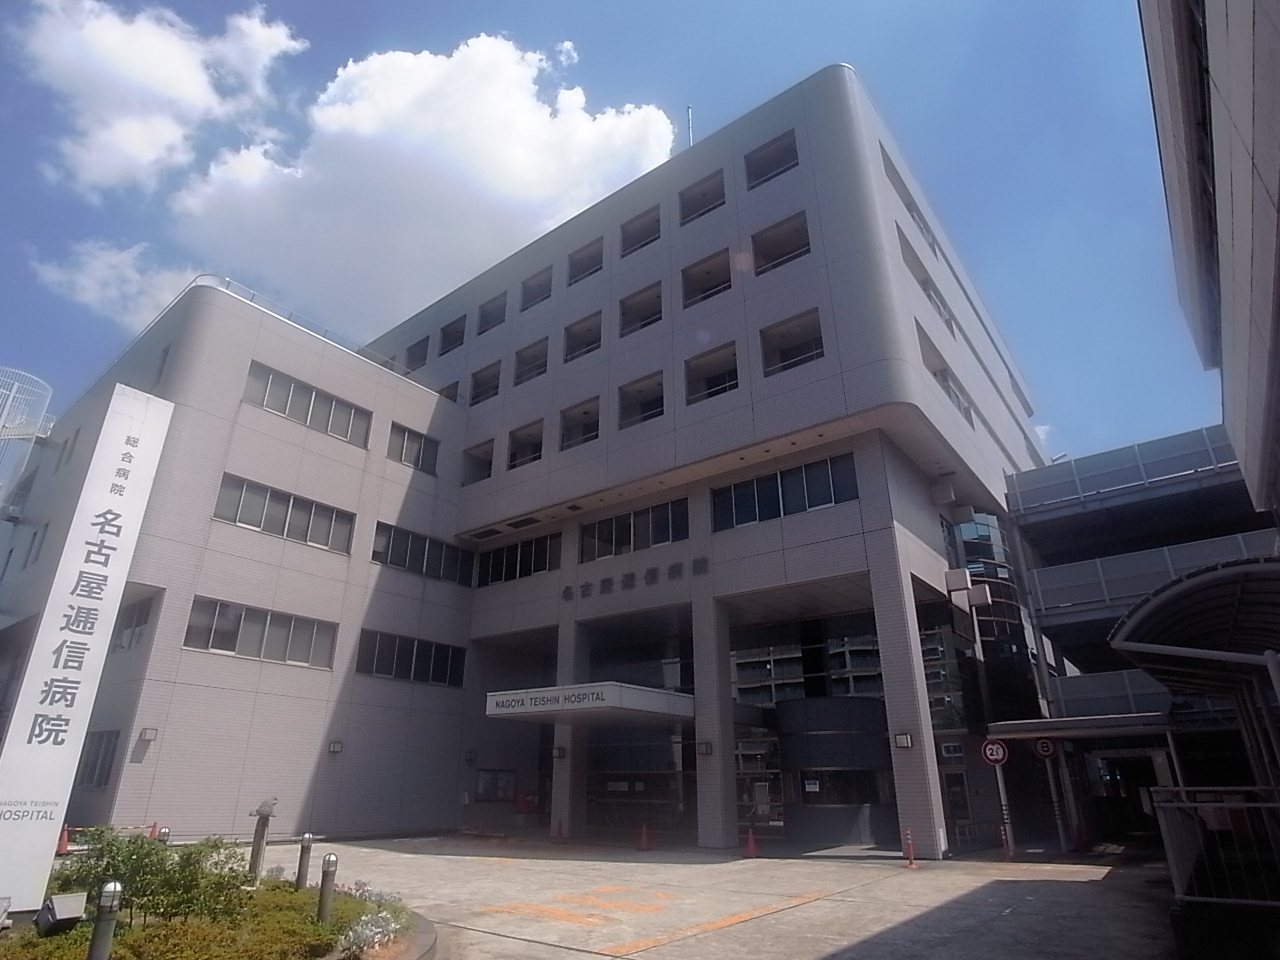 Hospital. 880m to Nagoya the Communications Hospital (General Hospital) (hospital)